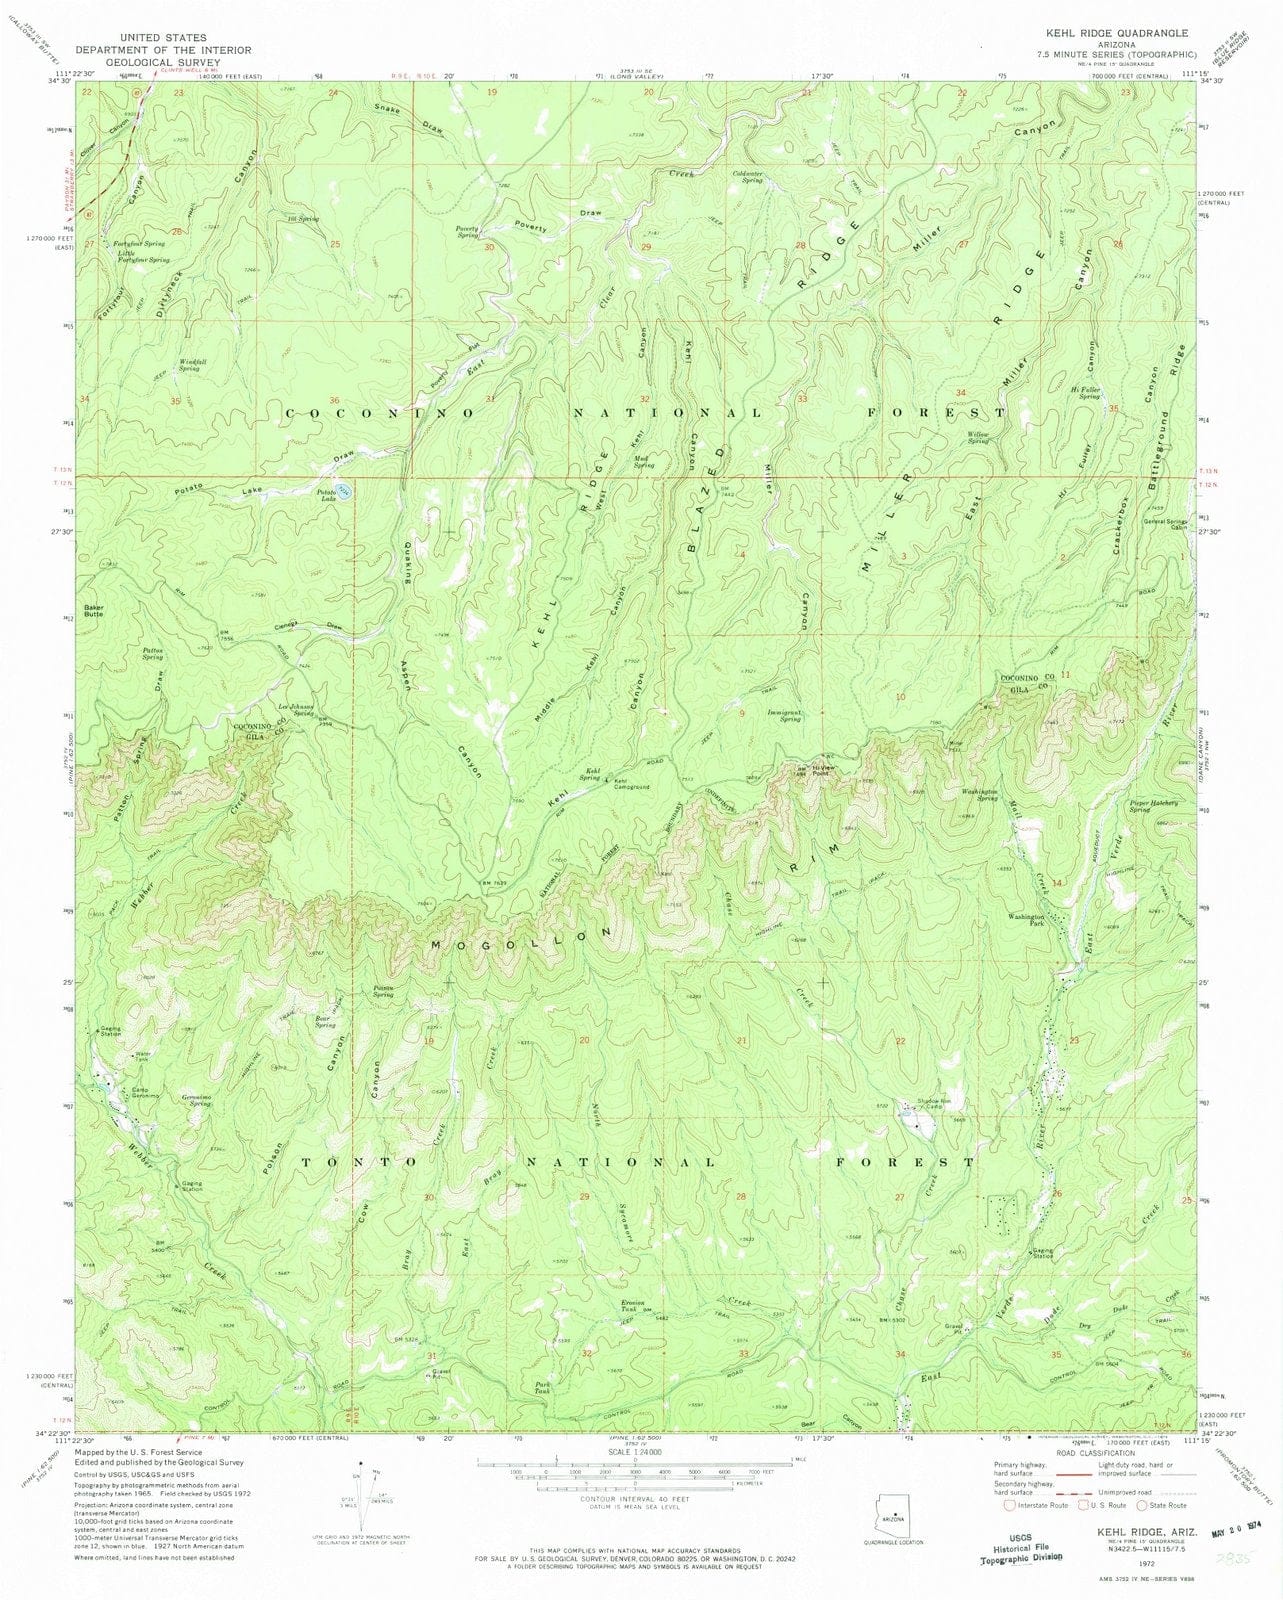 1972 Kehl Ridge, AZ - Arizona - USGS Topographic Map